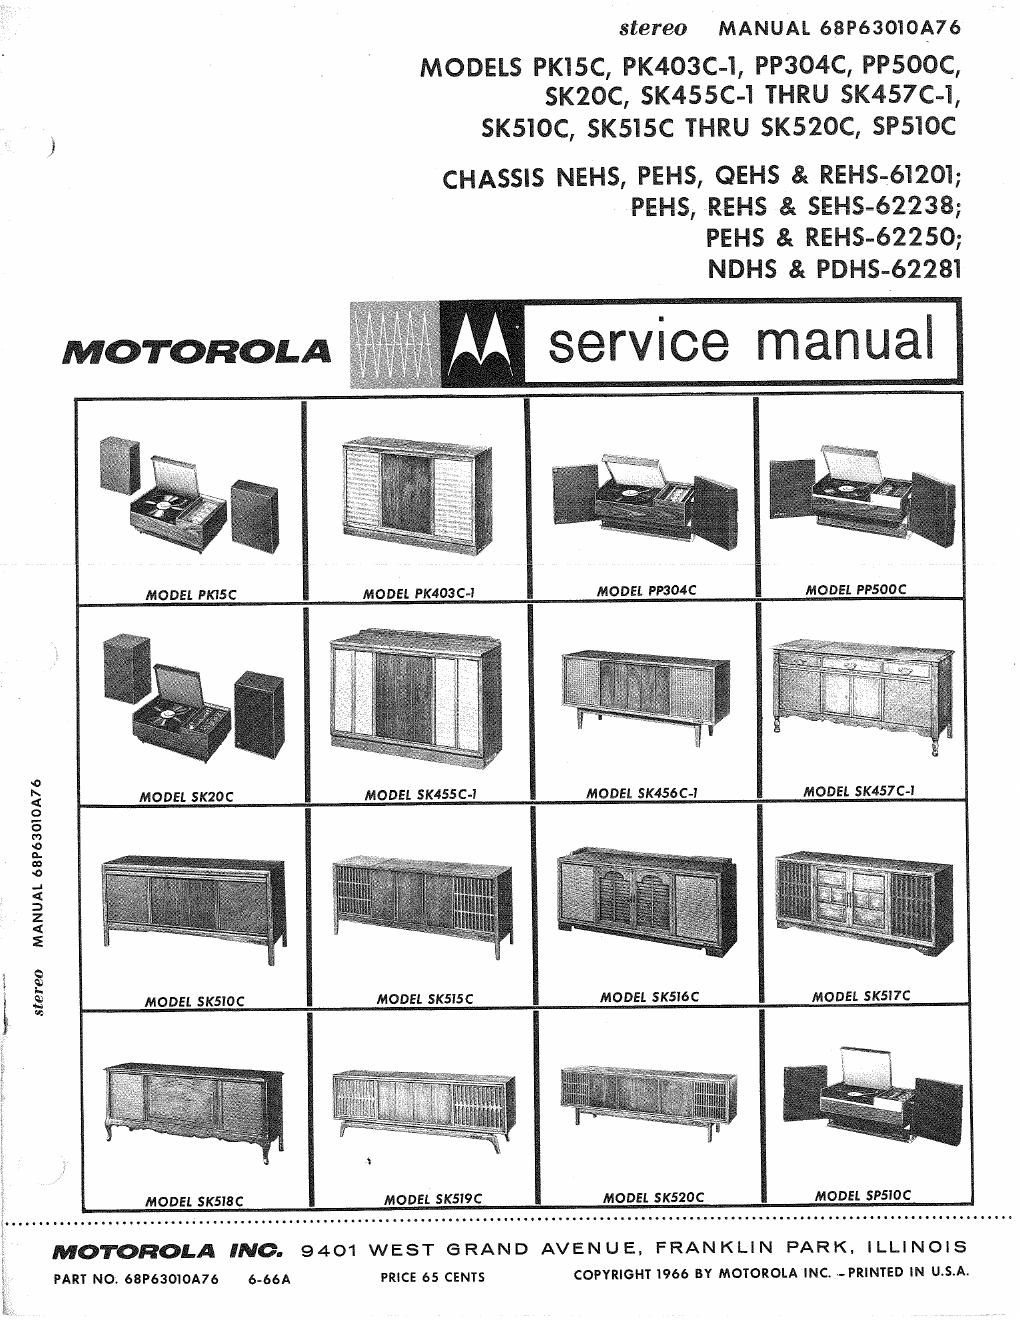 motorola sk 519 c service manual